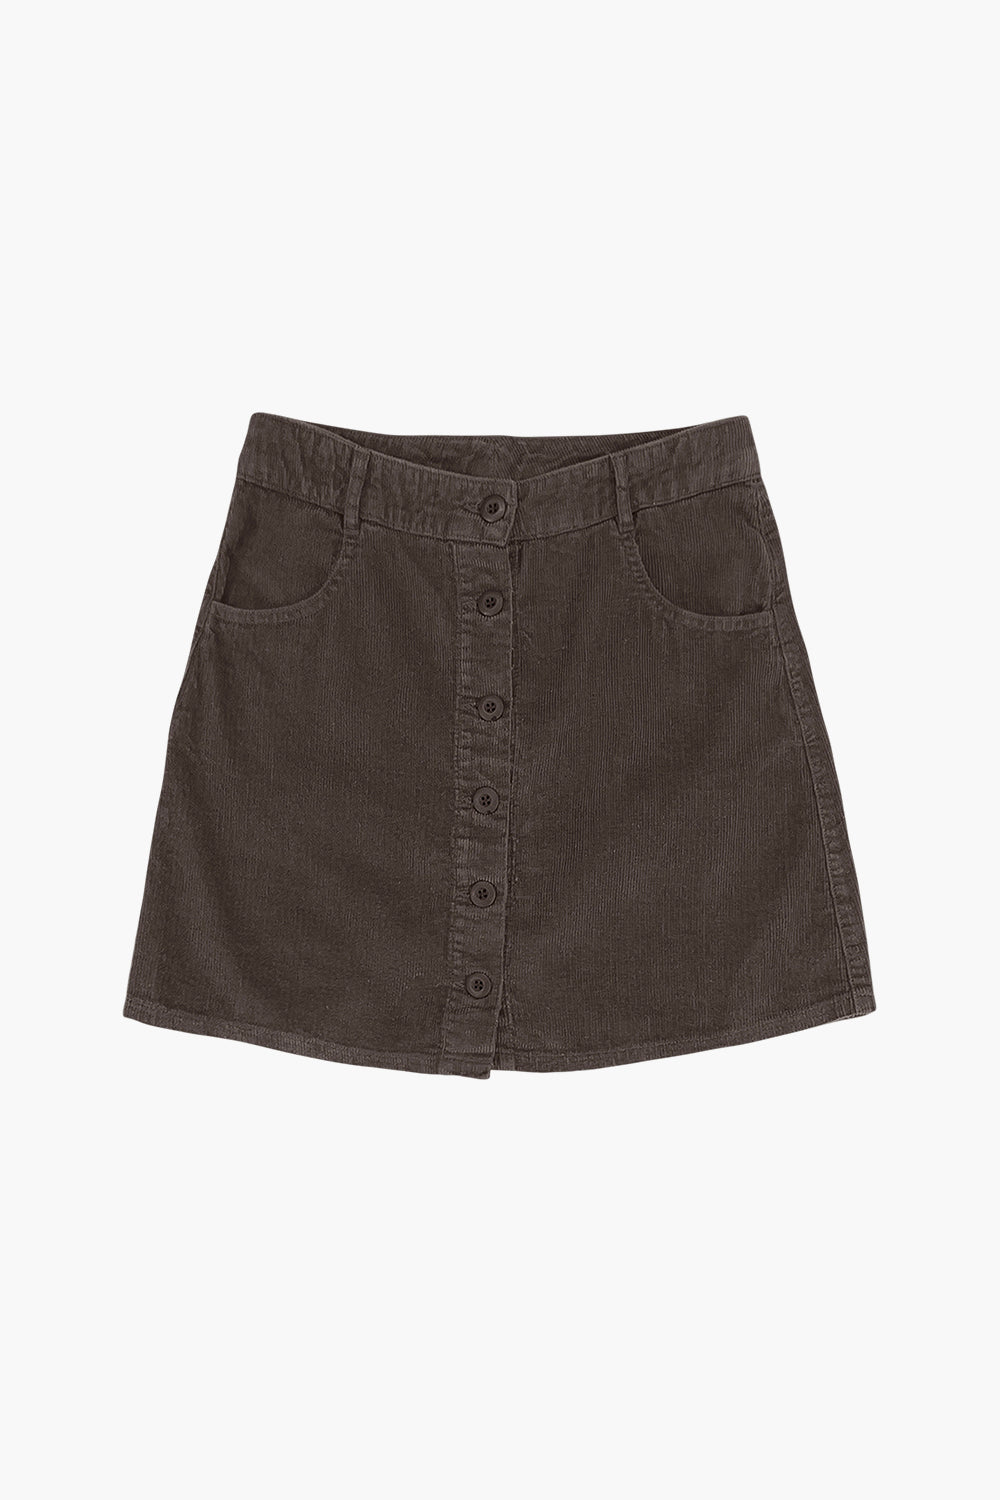 Corduroy Vassar Skirt | Jungmaven Hemp Clothing & Accessories / Color: Coffee Bean